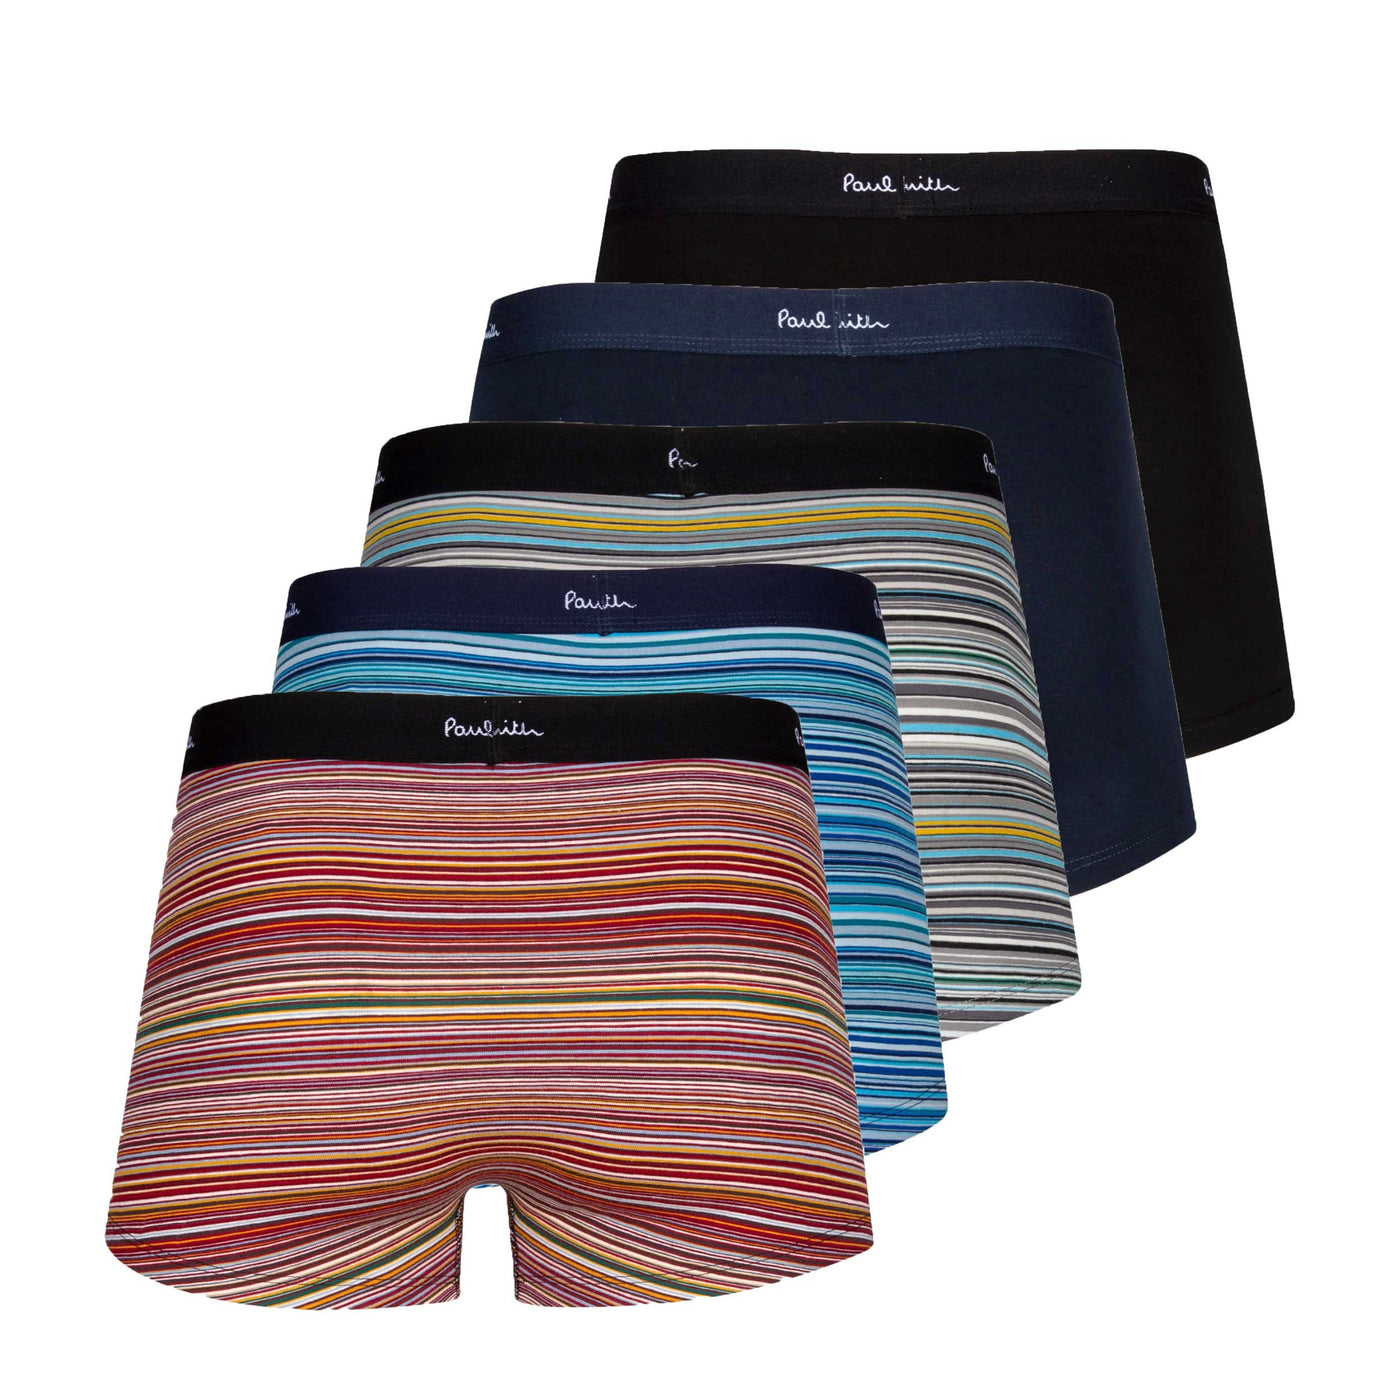 Paul Smith Trunk 5 Pack Signature Underwear in Multi Back